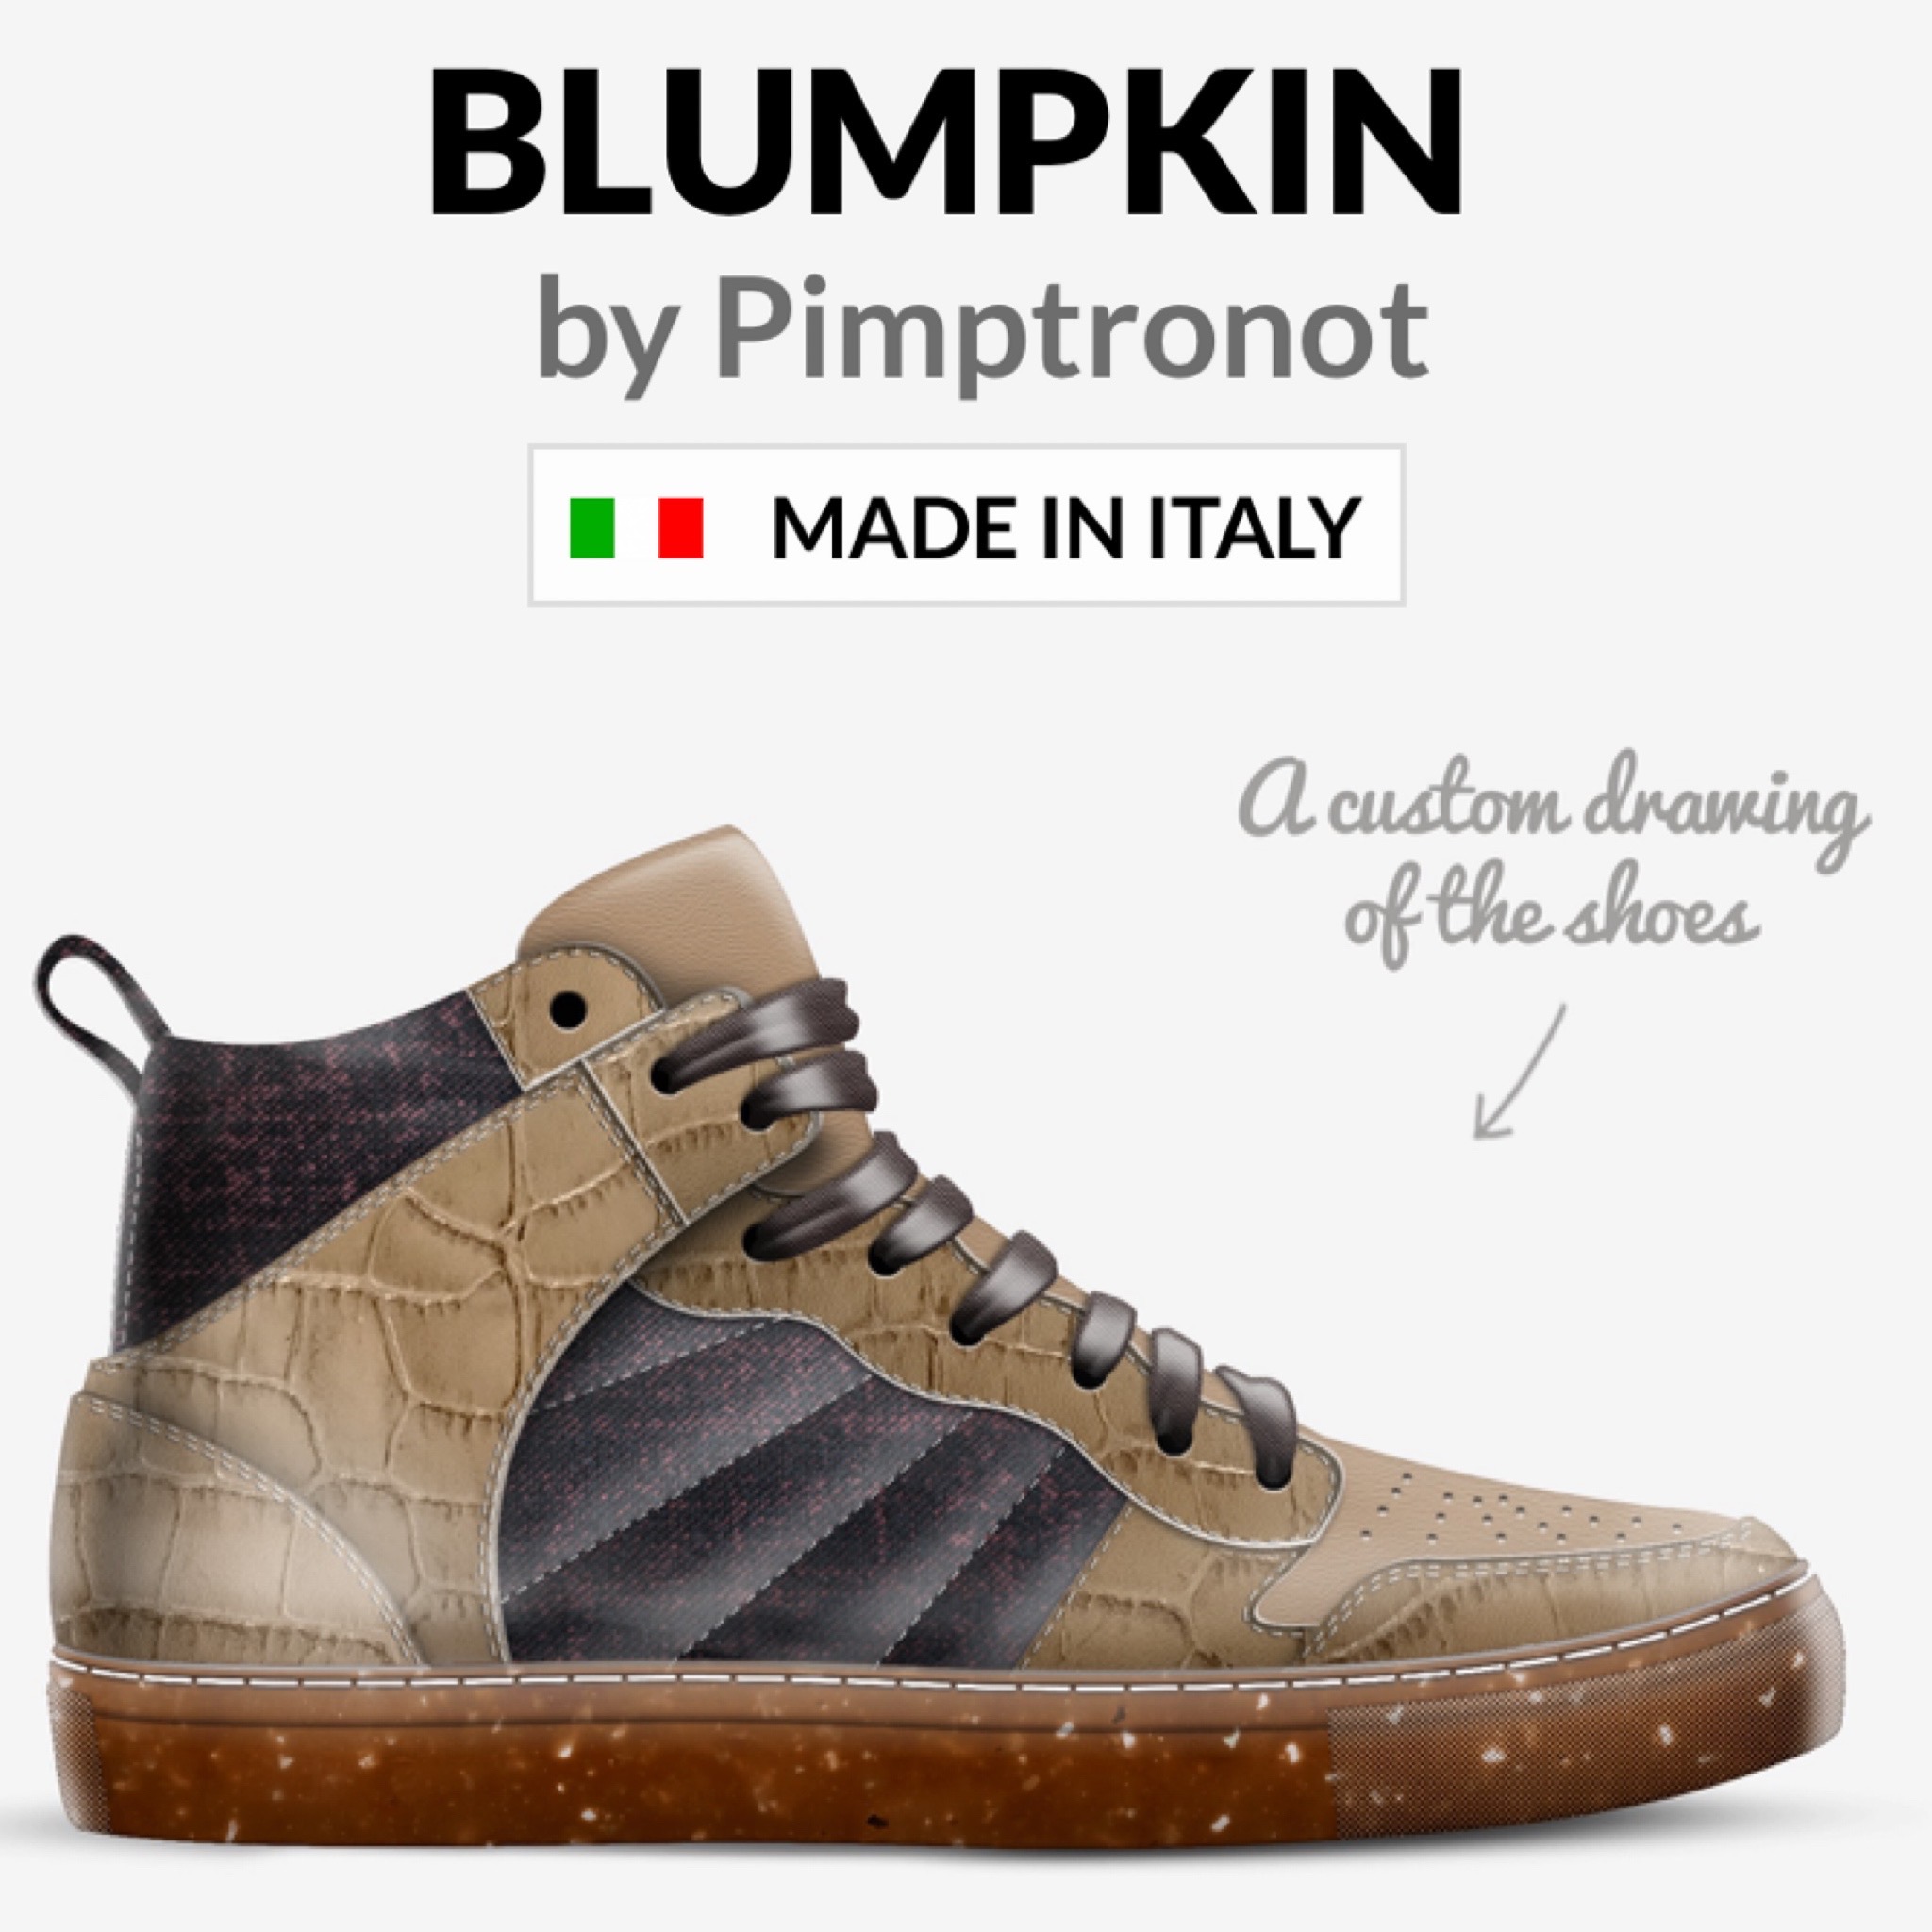 aini akbar recommends Real Blumpkin